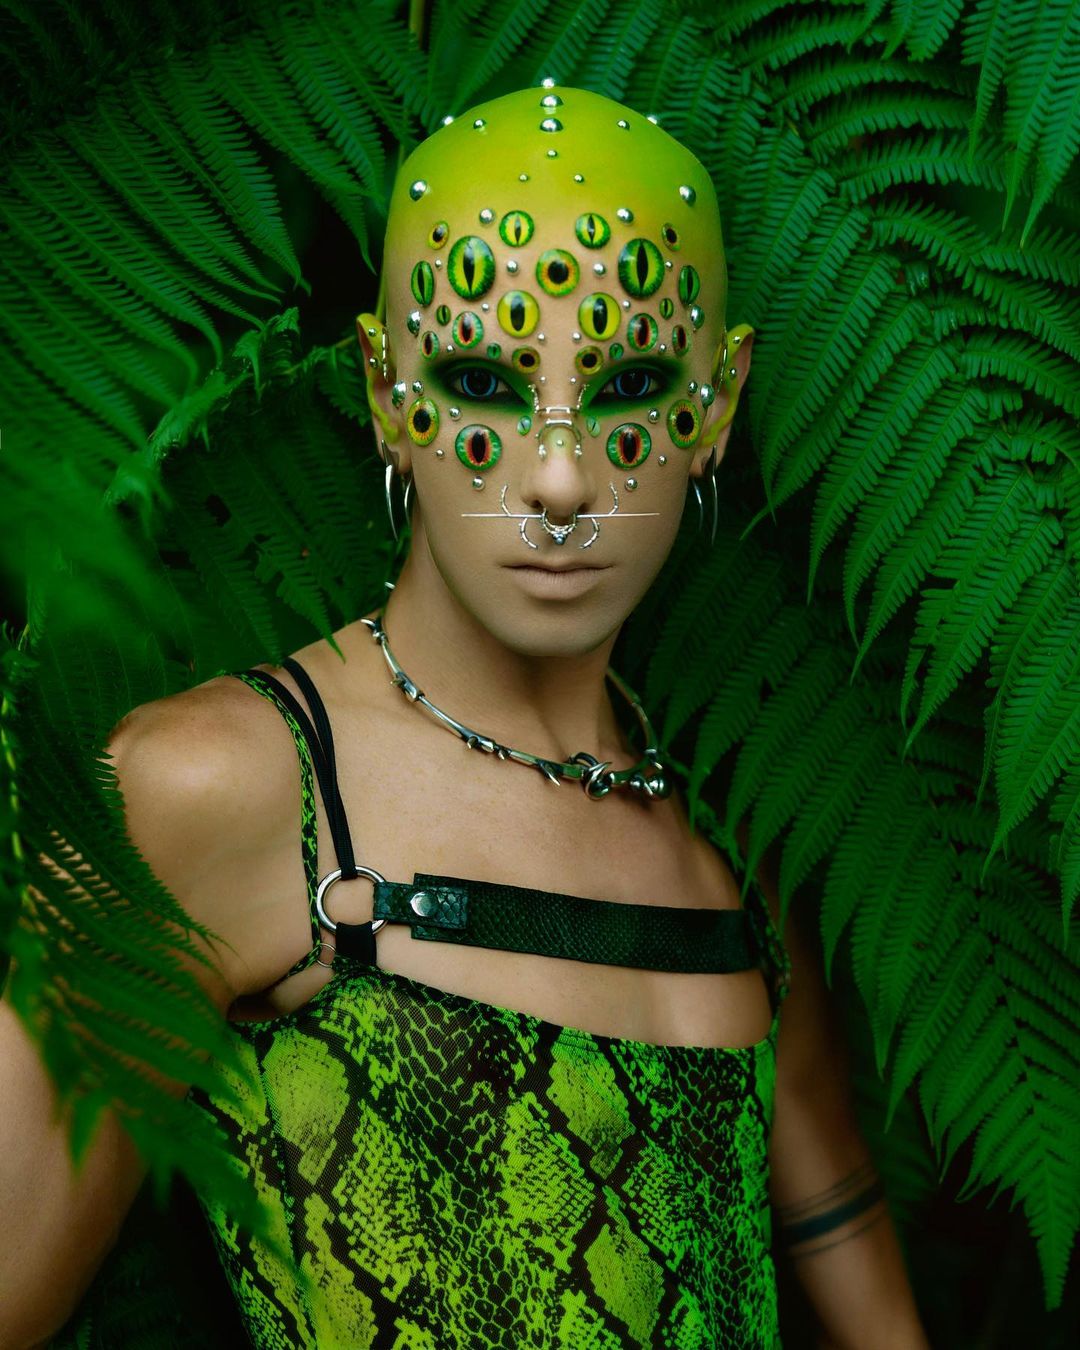 Ryan Burke's Model in Green Persona on Thursd